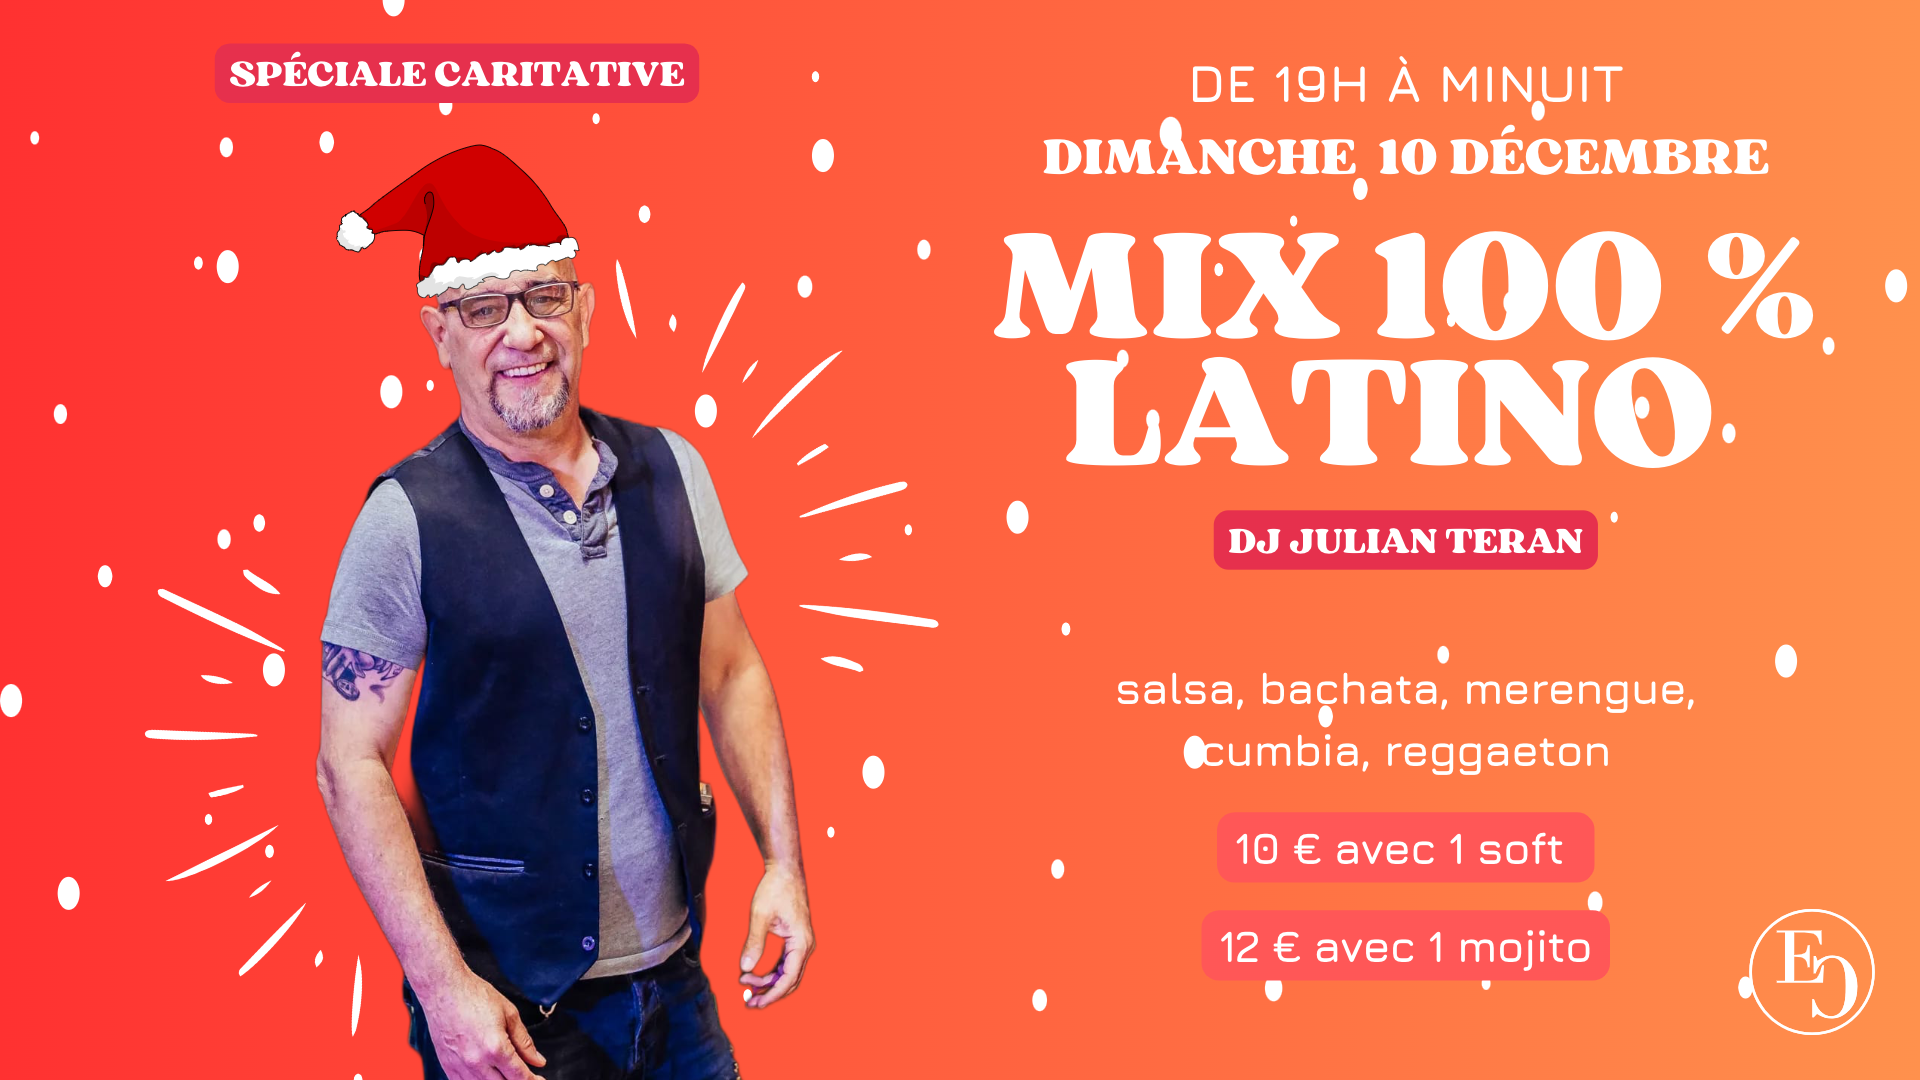 MIX 100% LATINO – DJ JULIAN TERAN - SPÉCIALE CARITATIVE